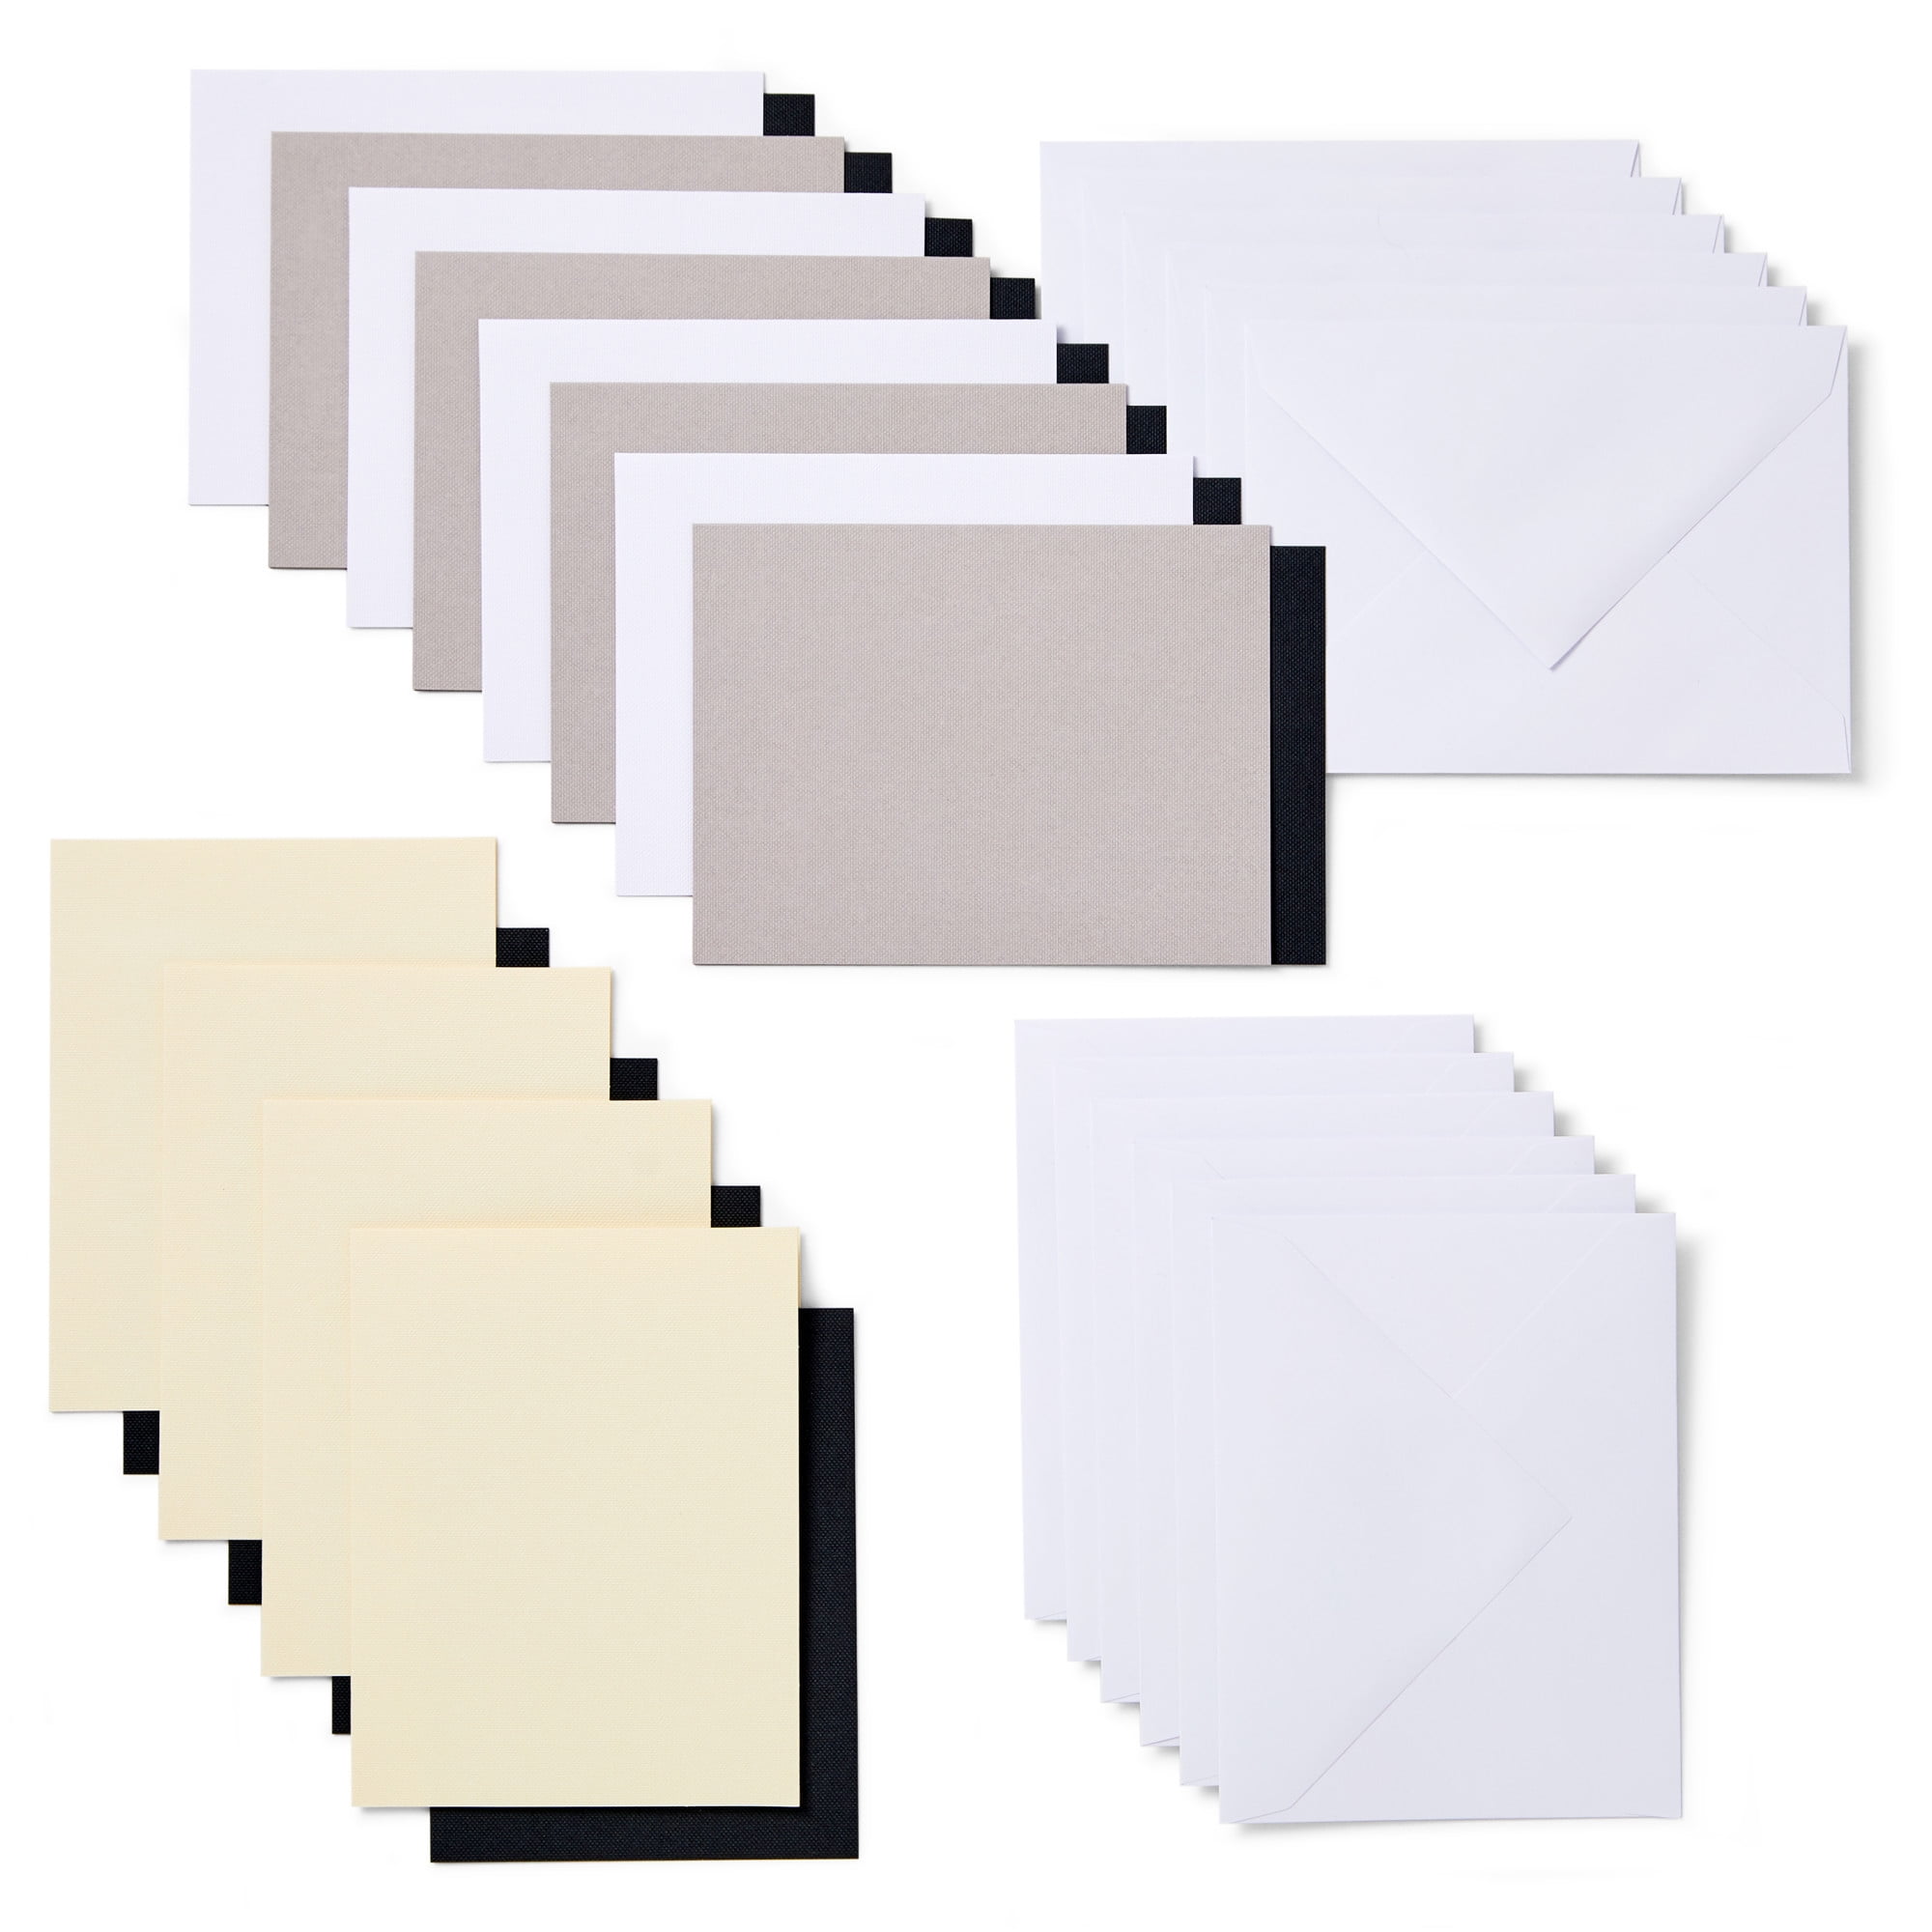 Cricut Joy • Insert Cards Macarons 5.5x4.25 12 sheets